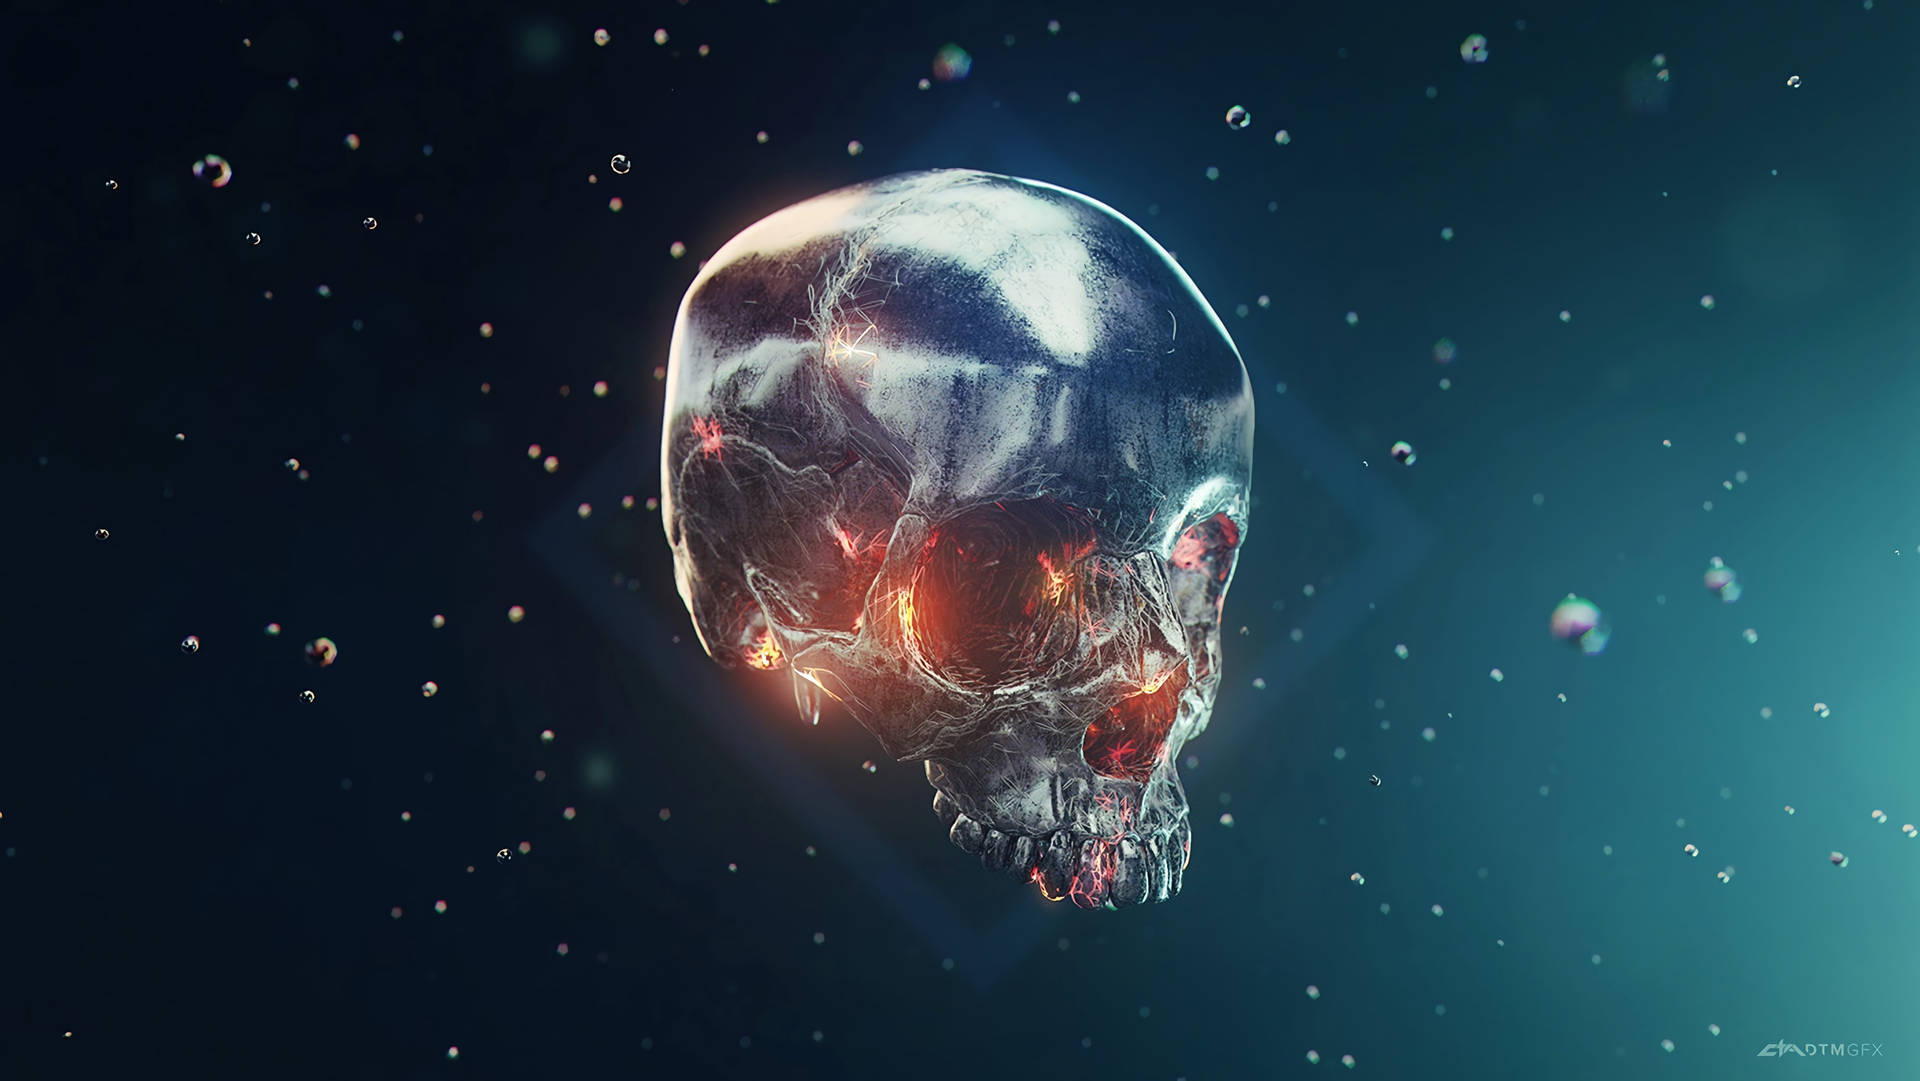 Cyberpunk Futuristic Skull Under The Water Wallpaper